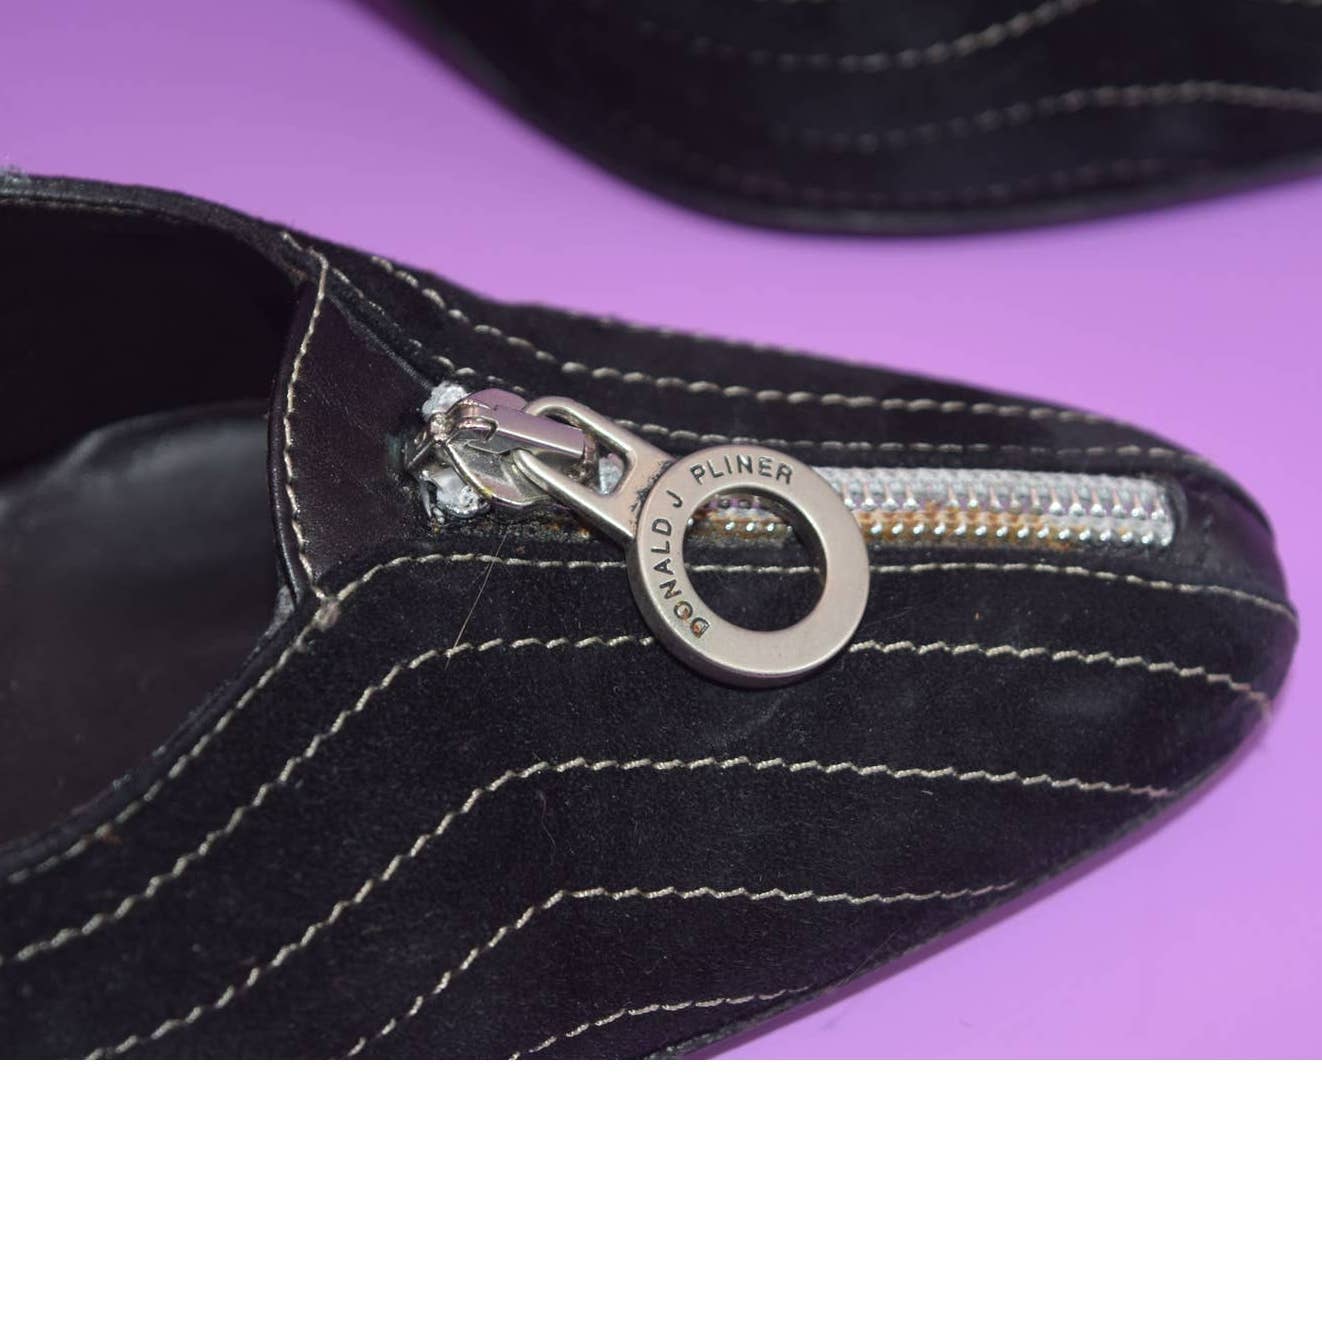 Couture Donald Pliner Della Black Suede Leather Zippered Heel - 8 M